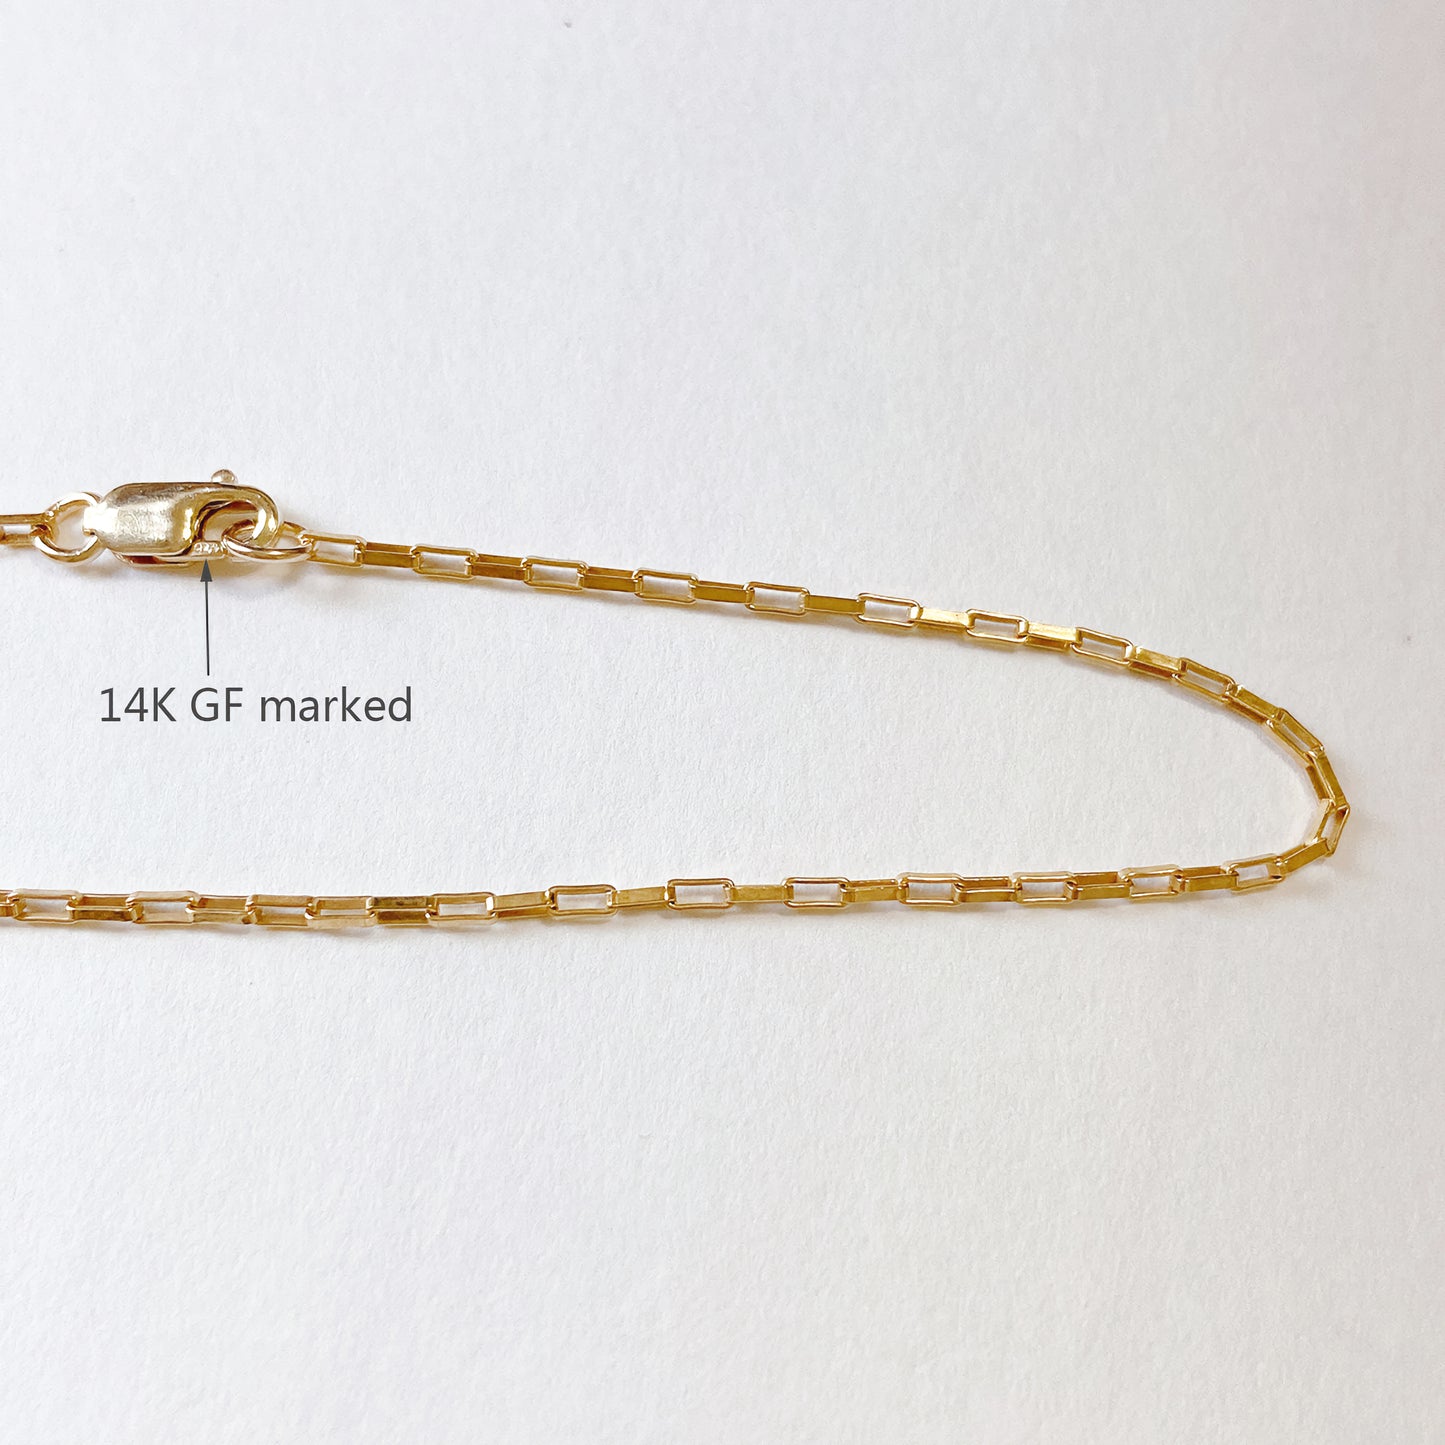 Luxury Gold Ankle Bracelet: A Timeless Treasure